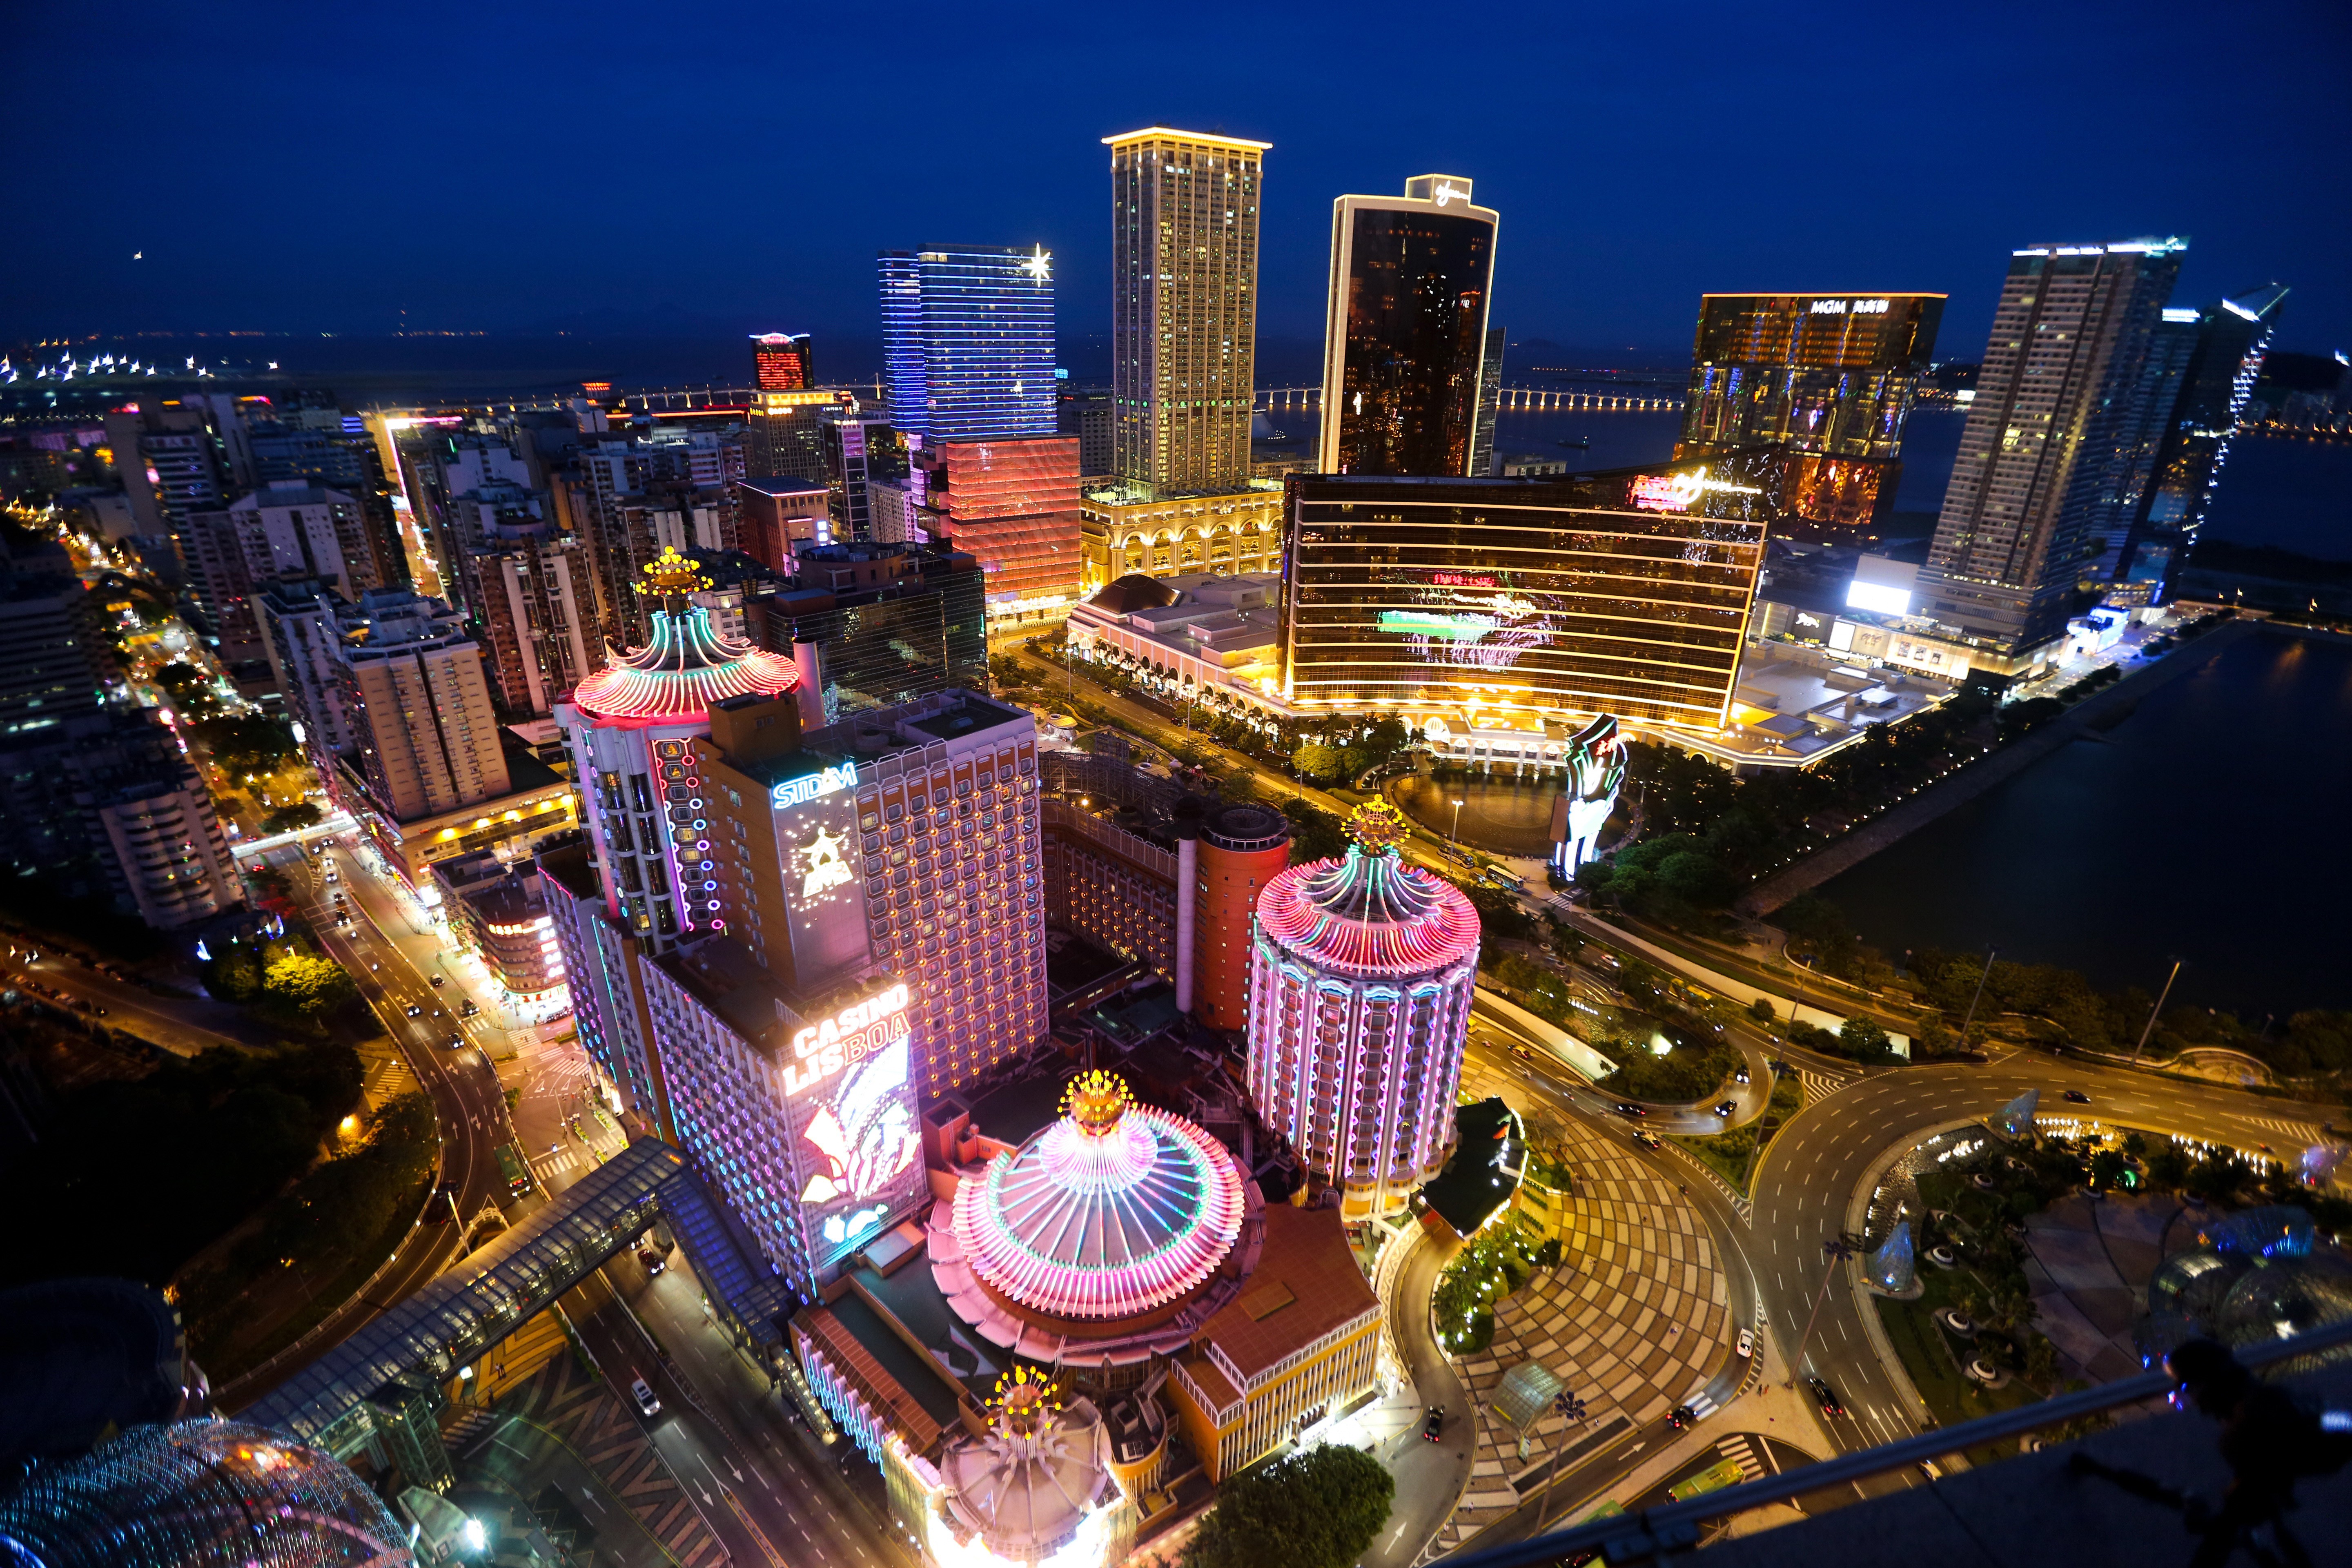 VIP gamblers are returning to Macau’s casinos. File photo